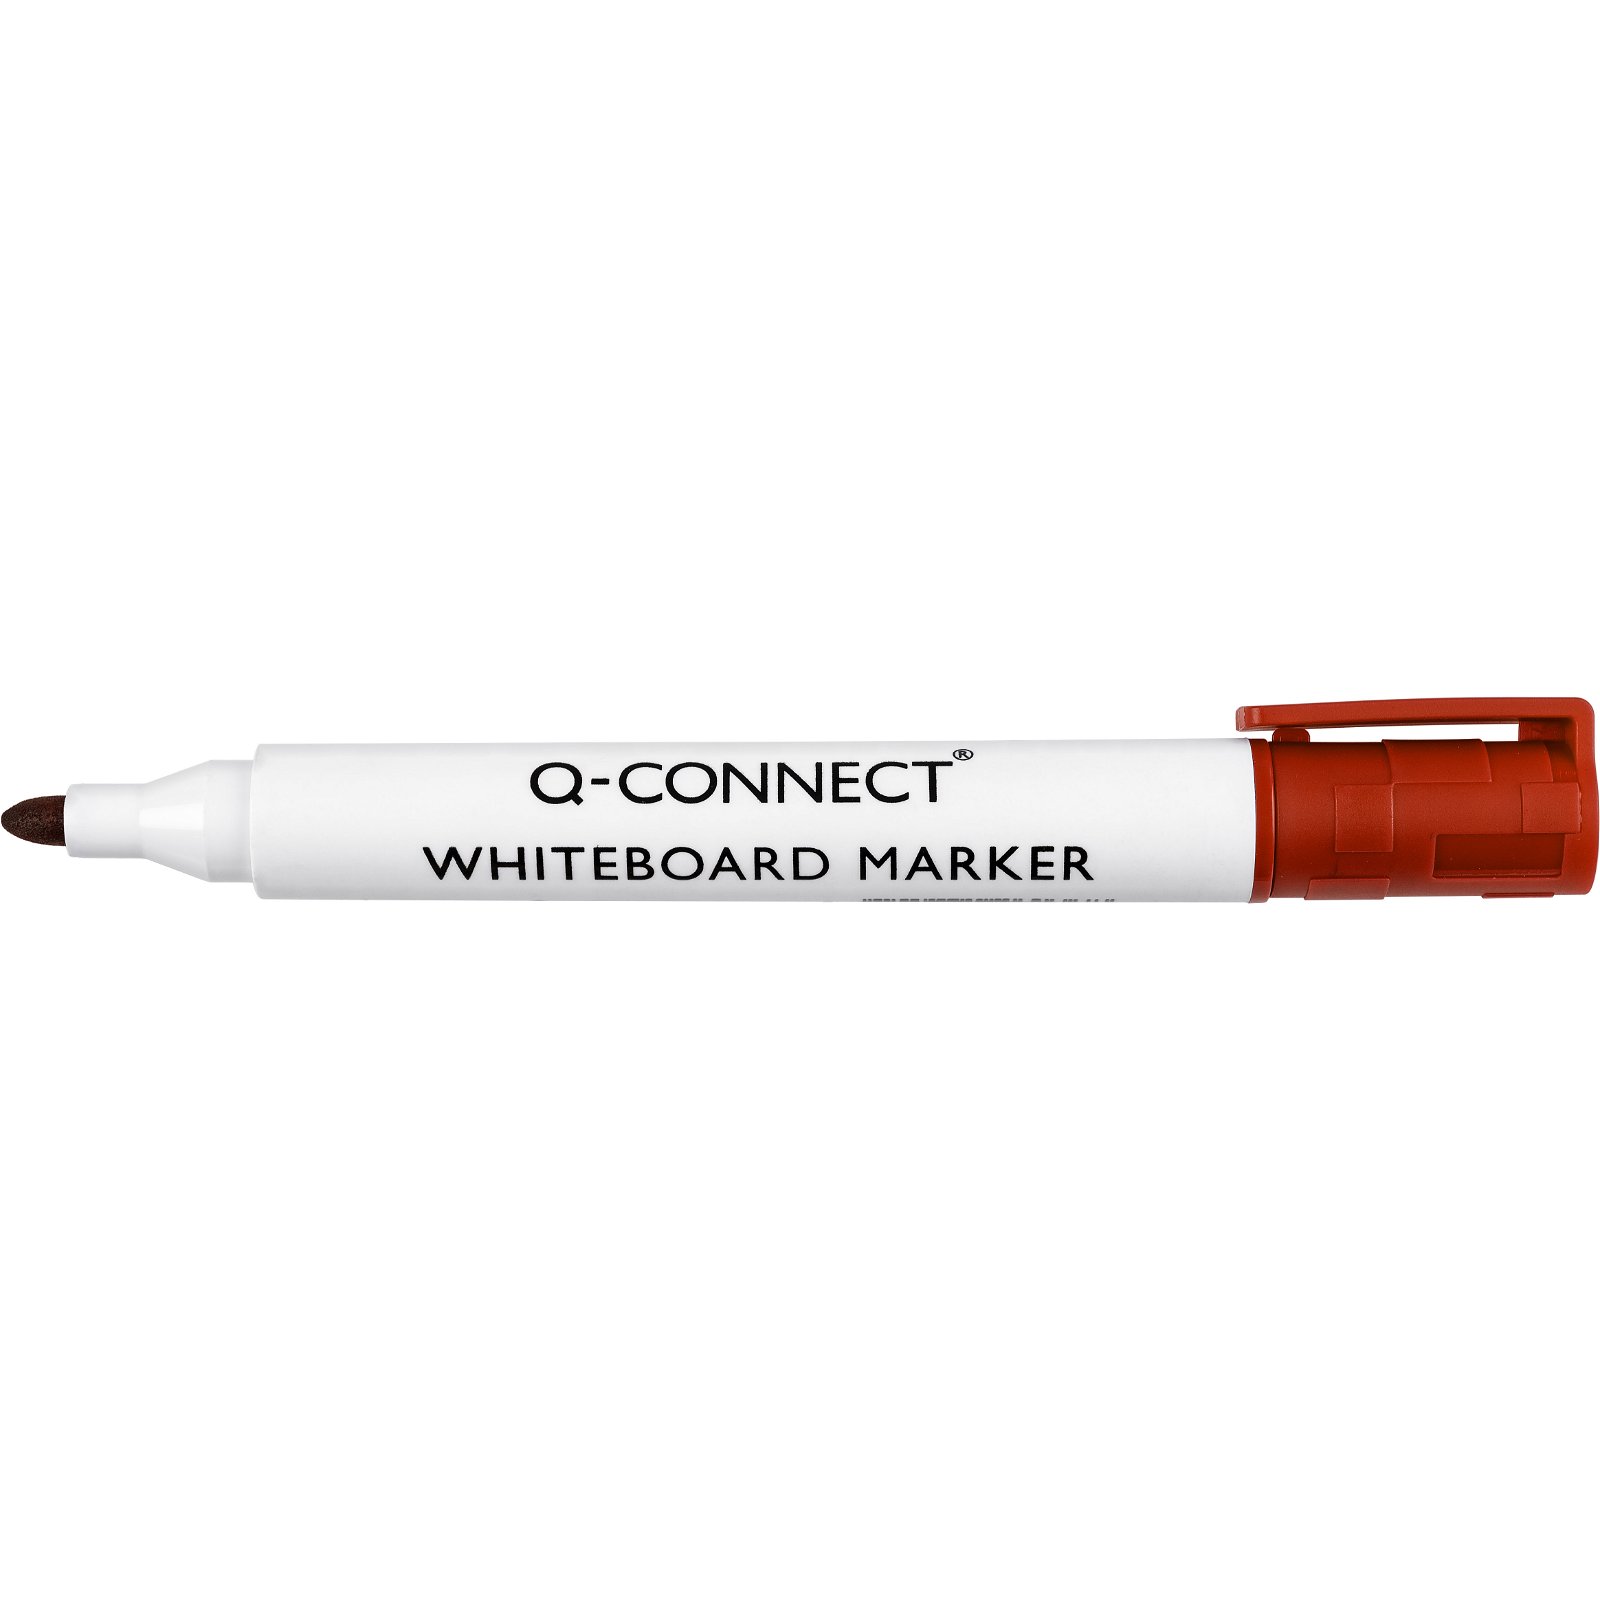 Q-connect whiteboardmarker rod